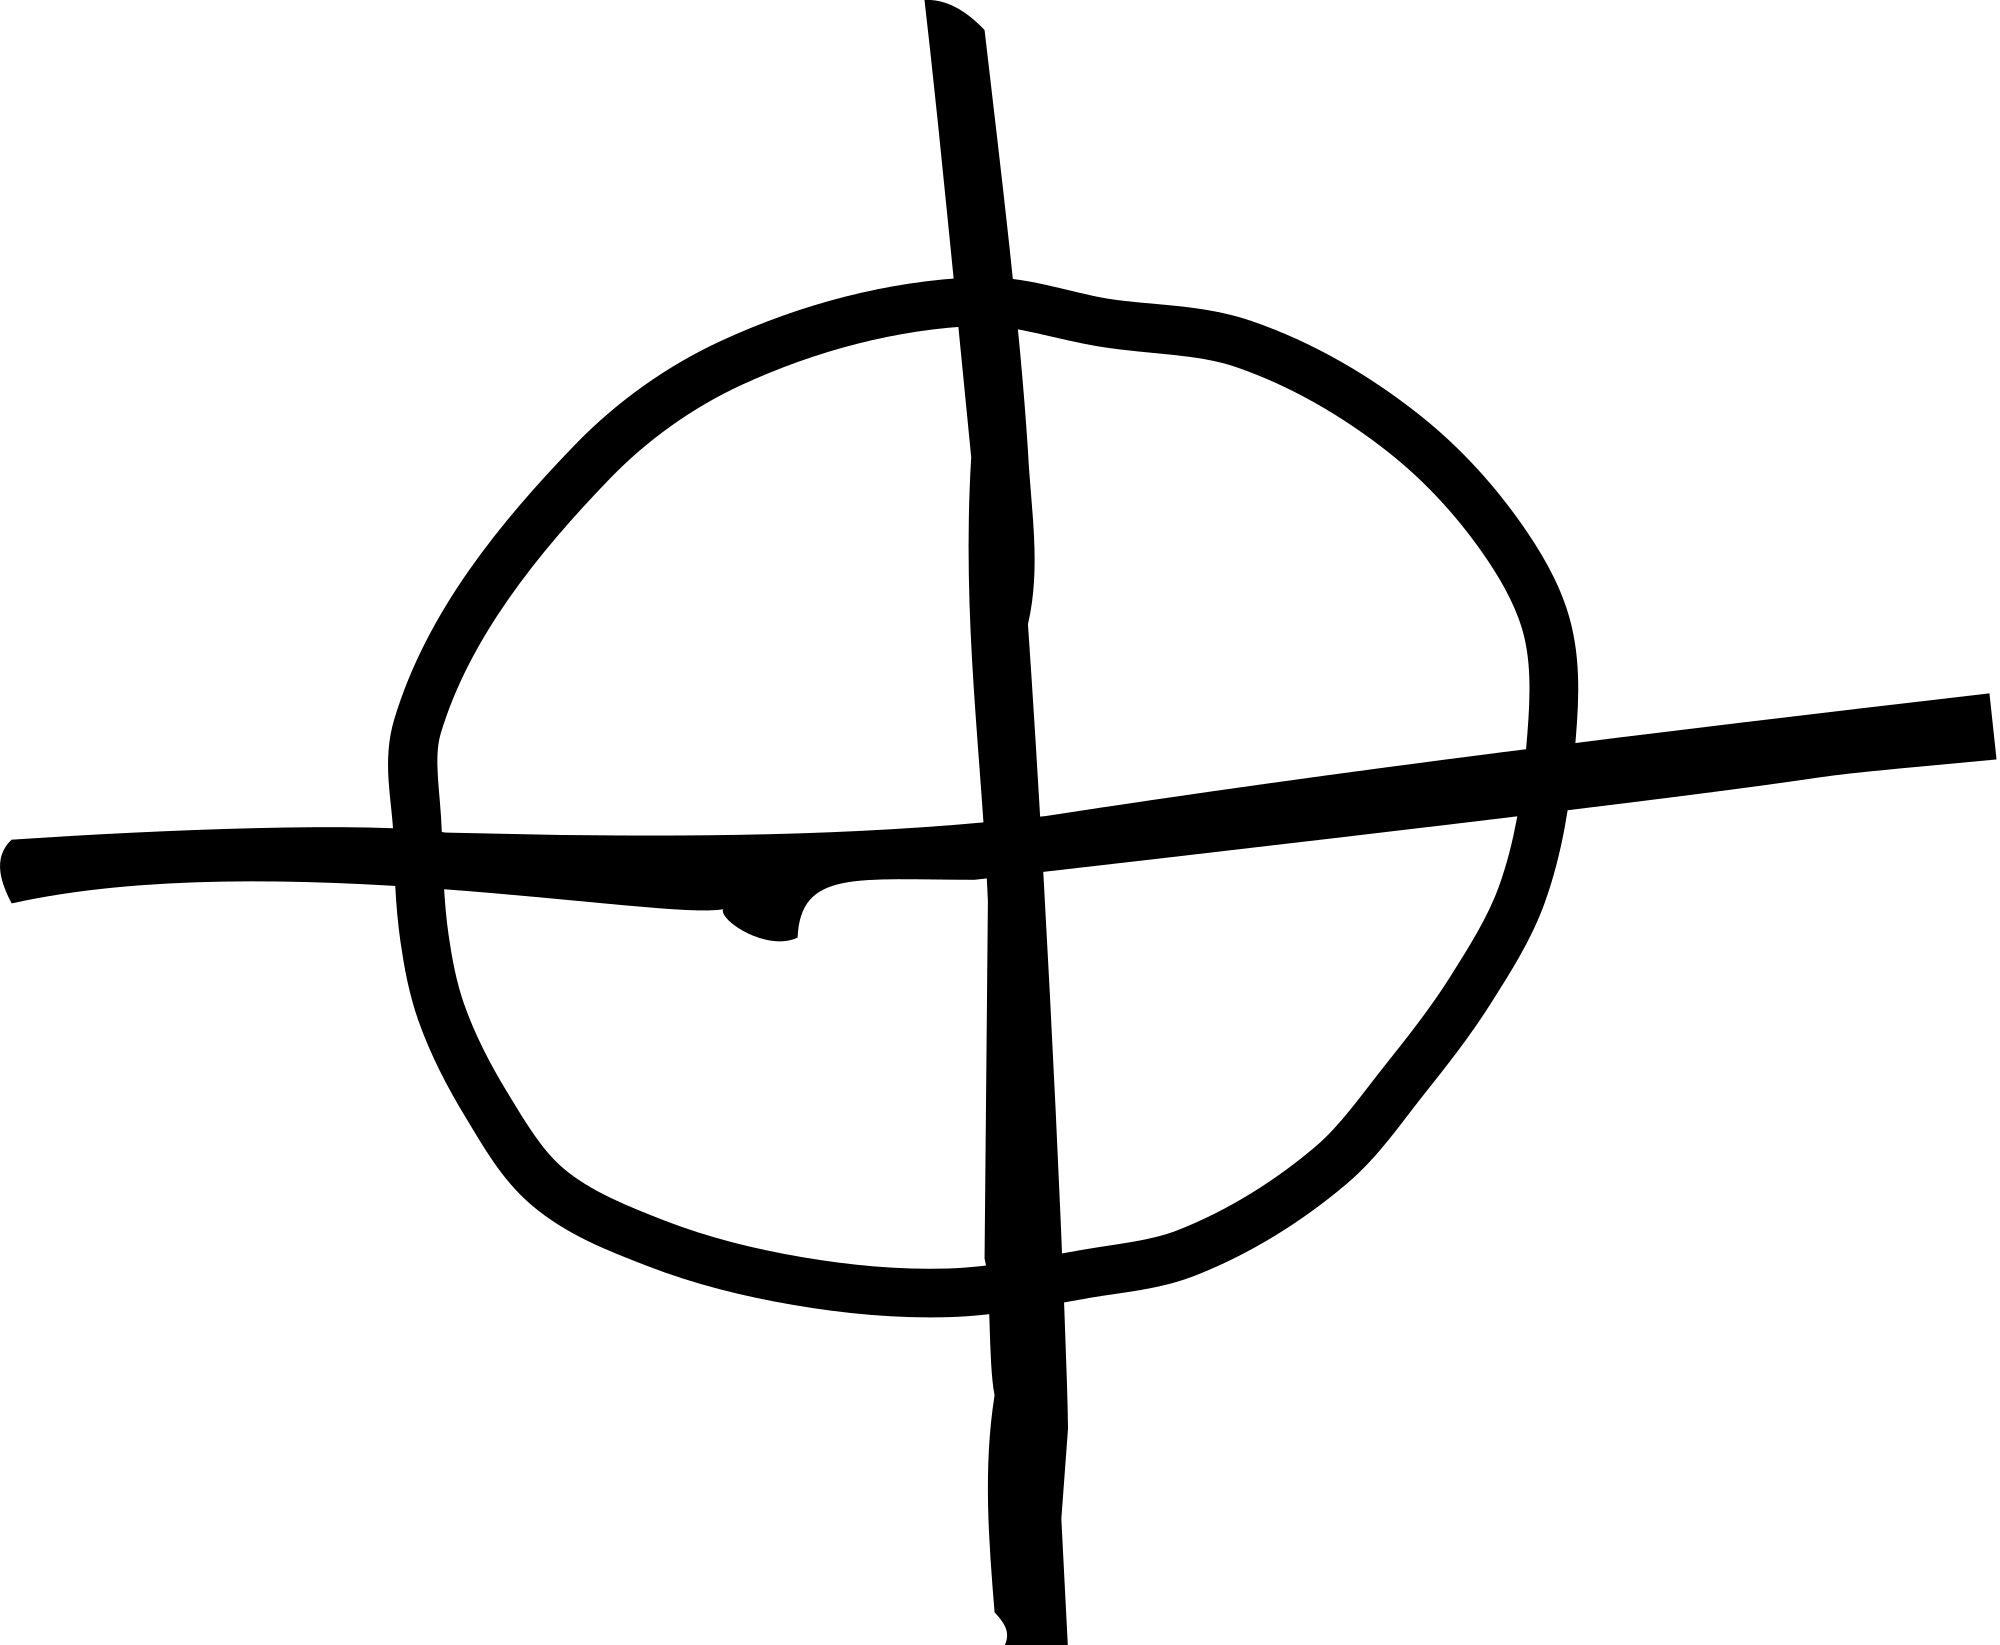 Open - Zodiac Killer Sign (2000x1645)